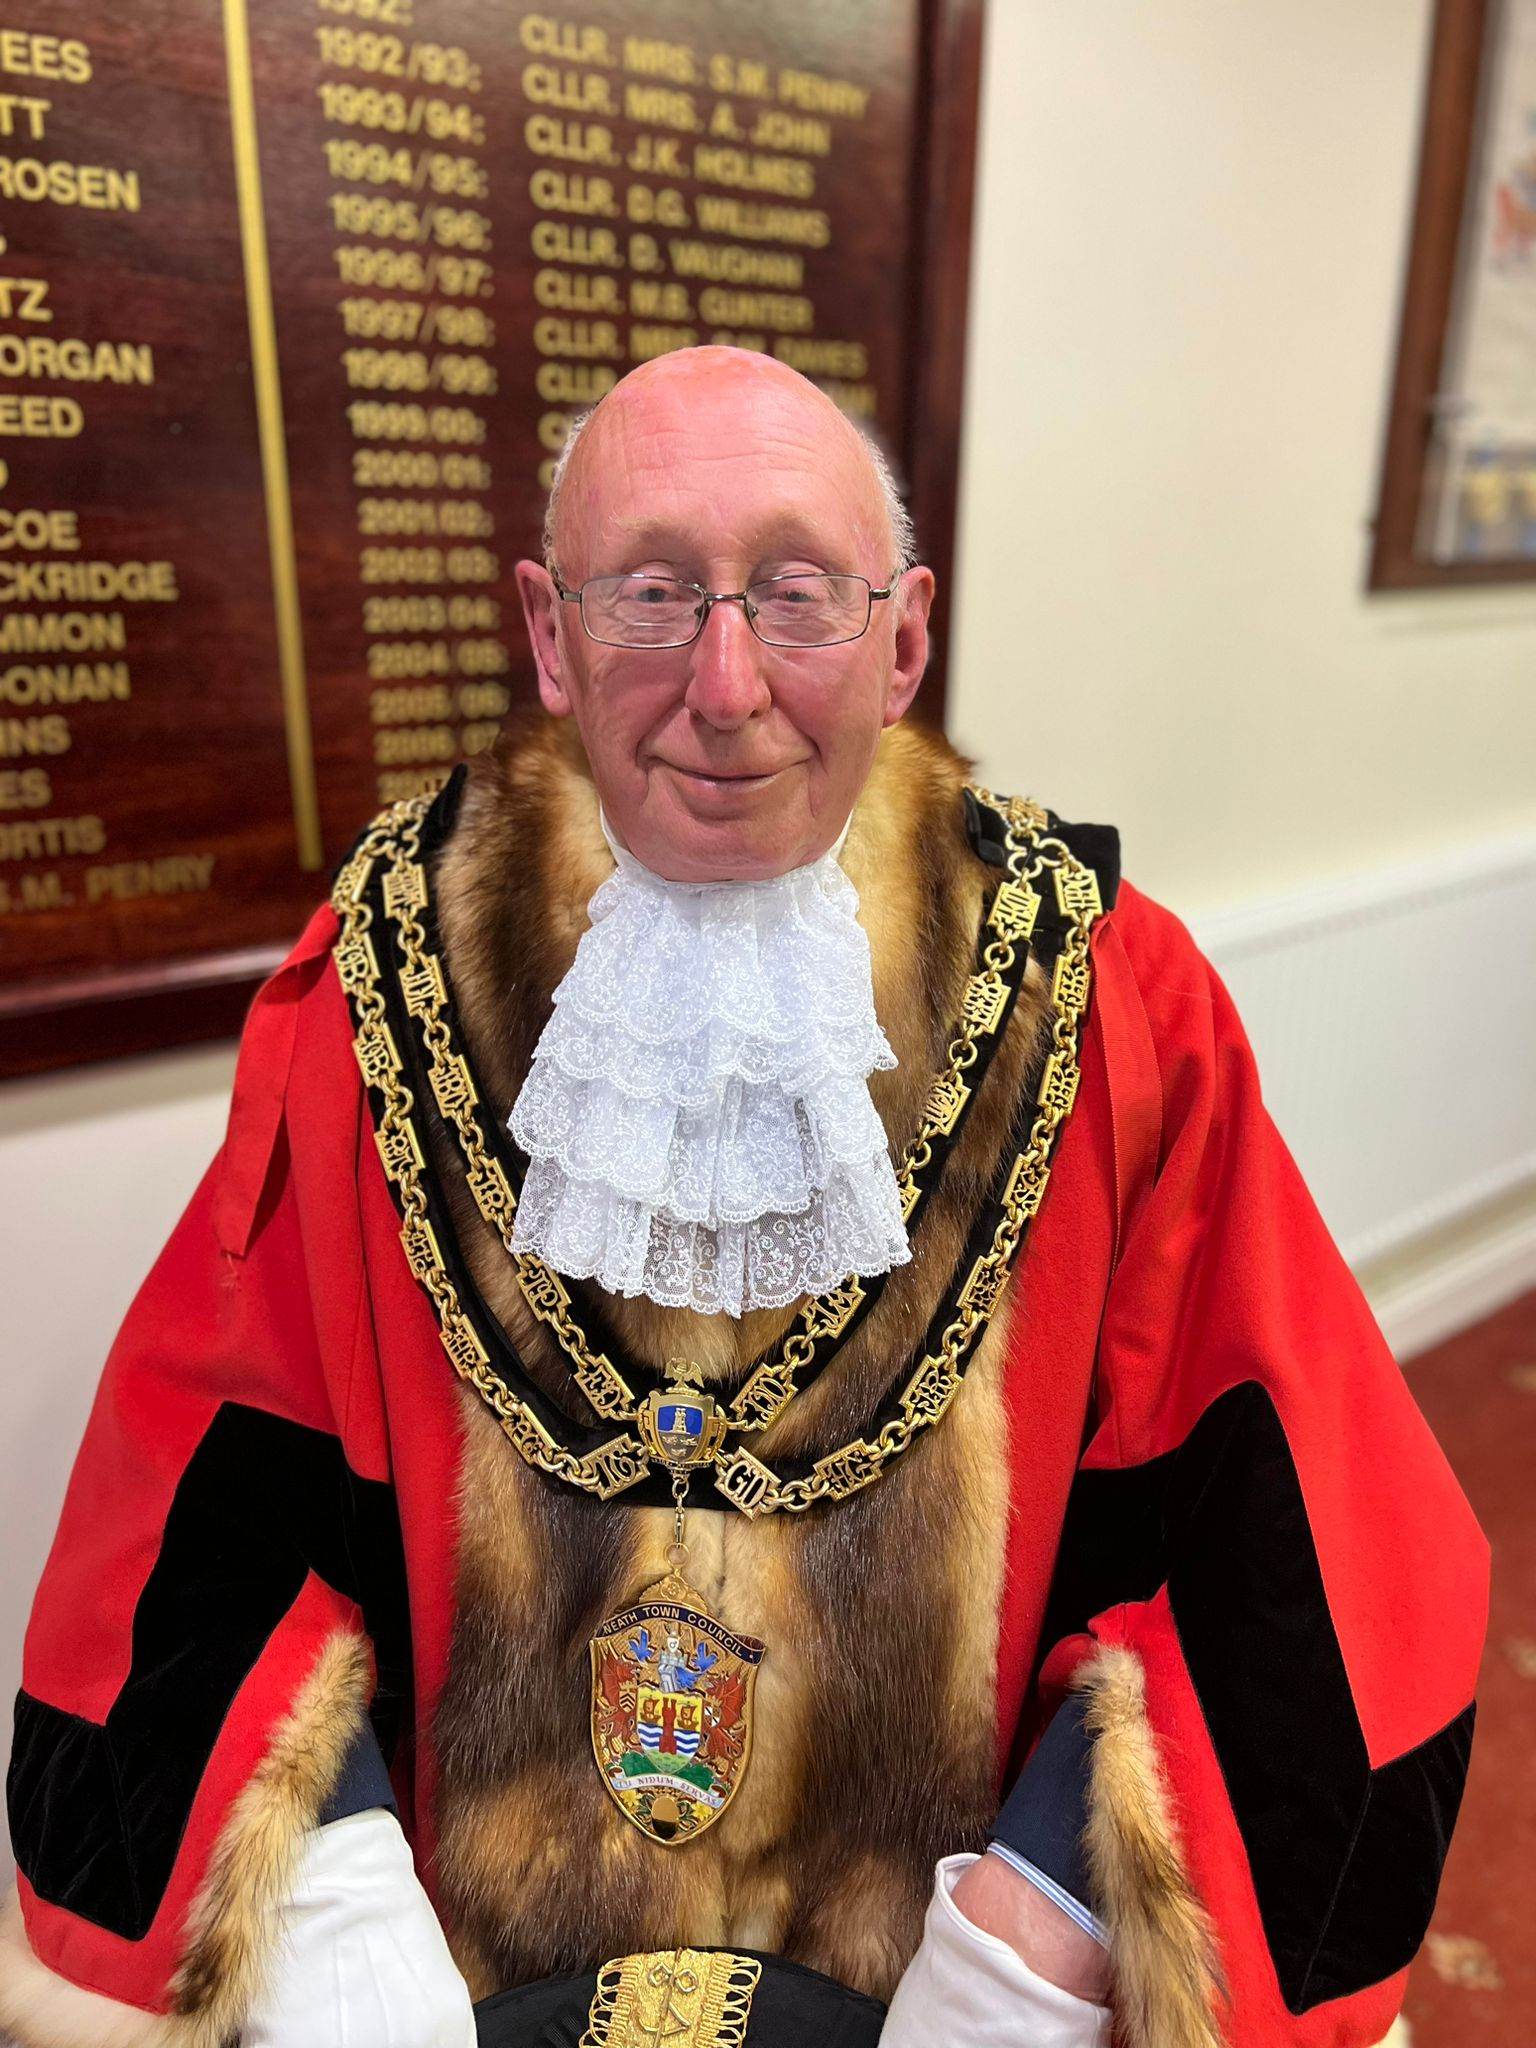 Cllr John Warman - Neath Town Mayor